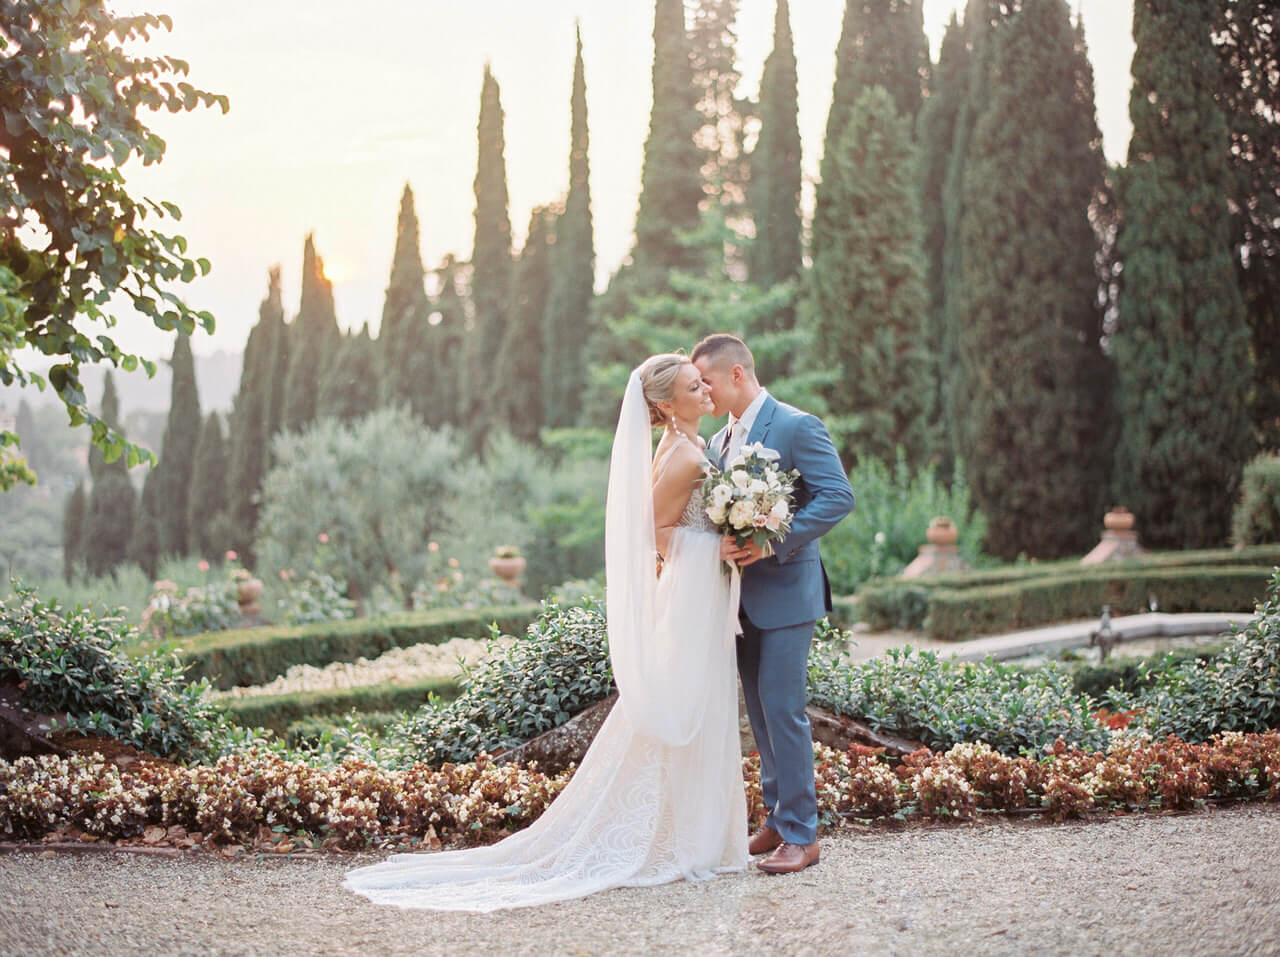 Italian garden summer weddings and Italian gardens - Villa Agape